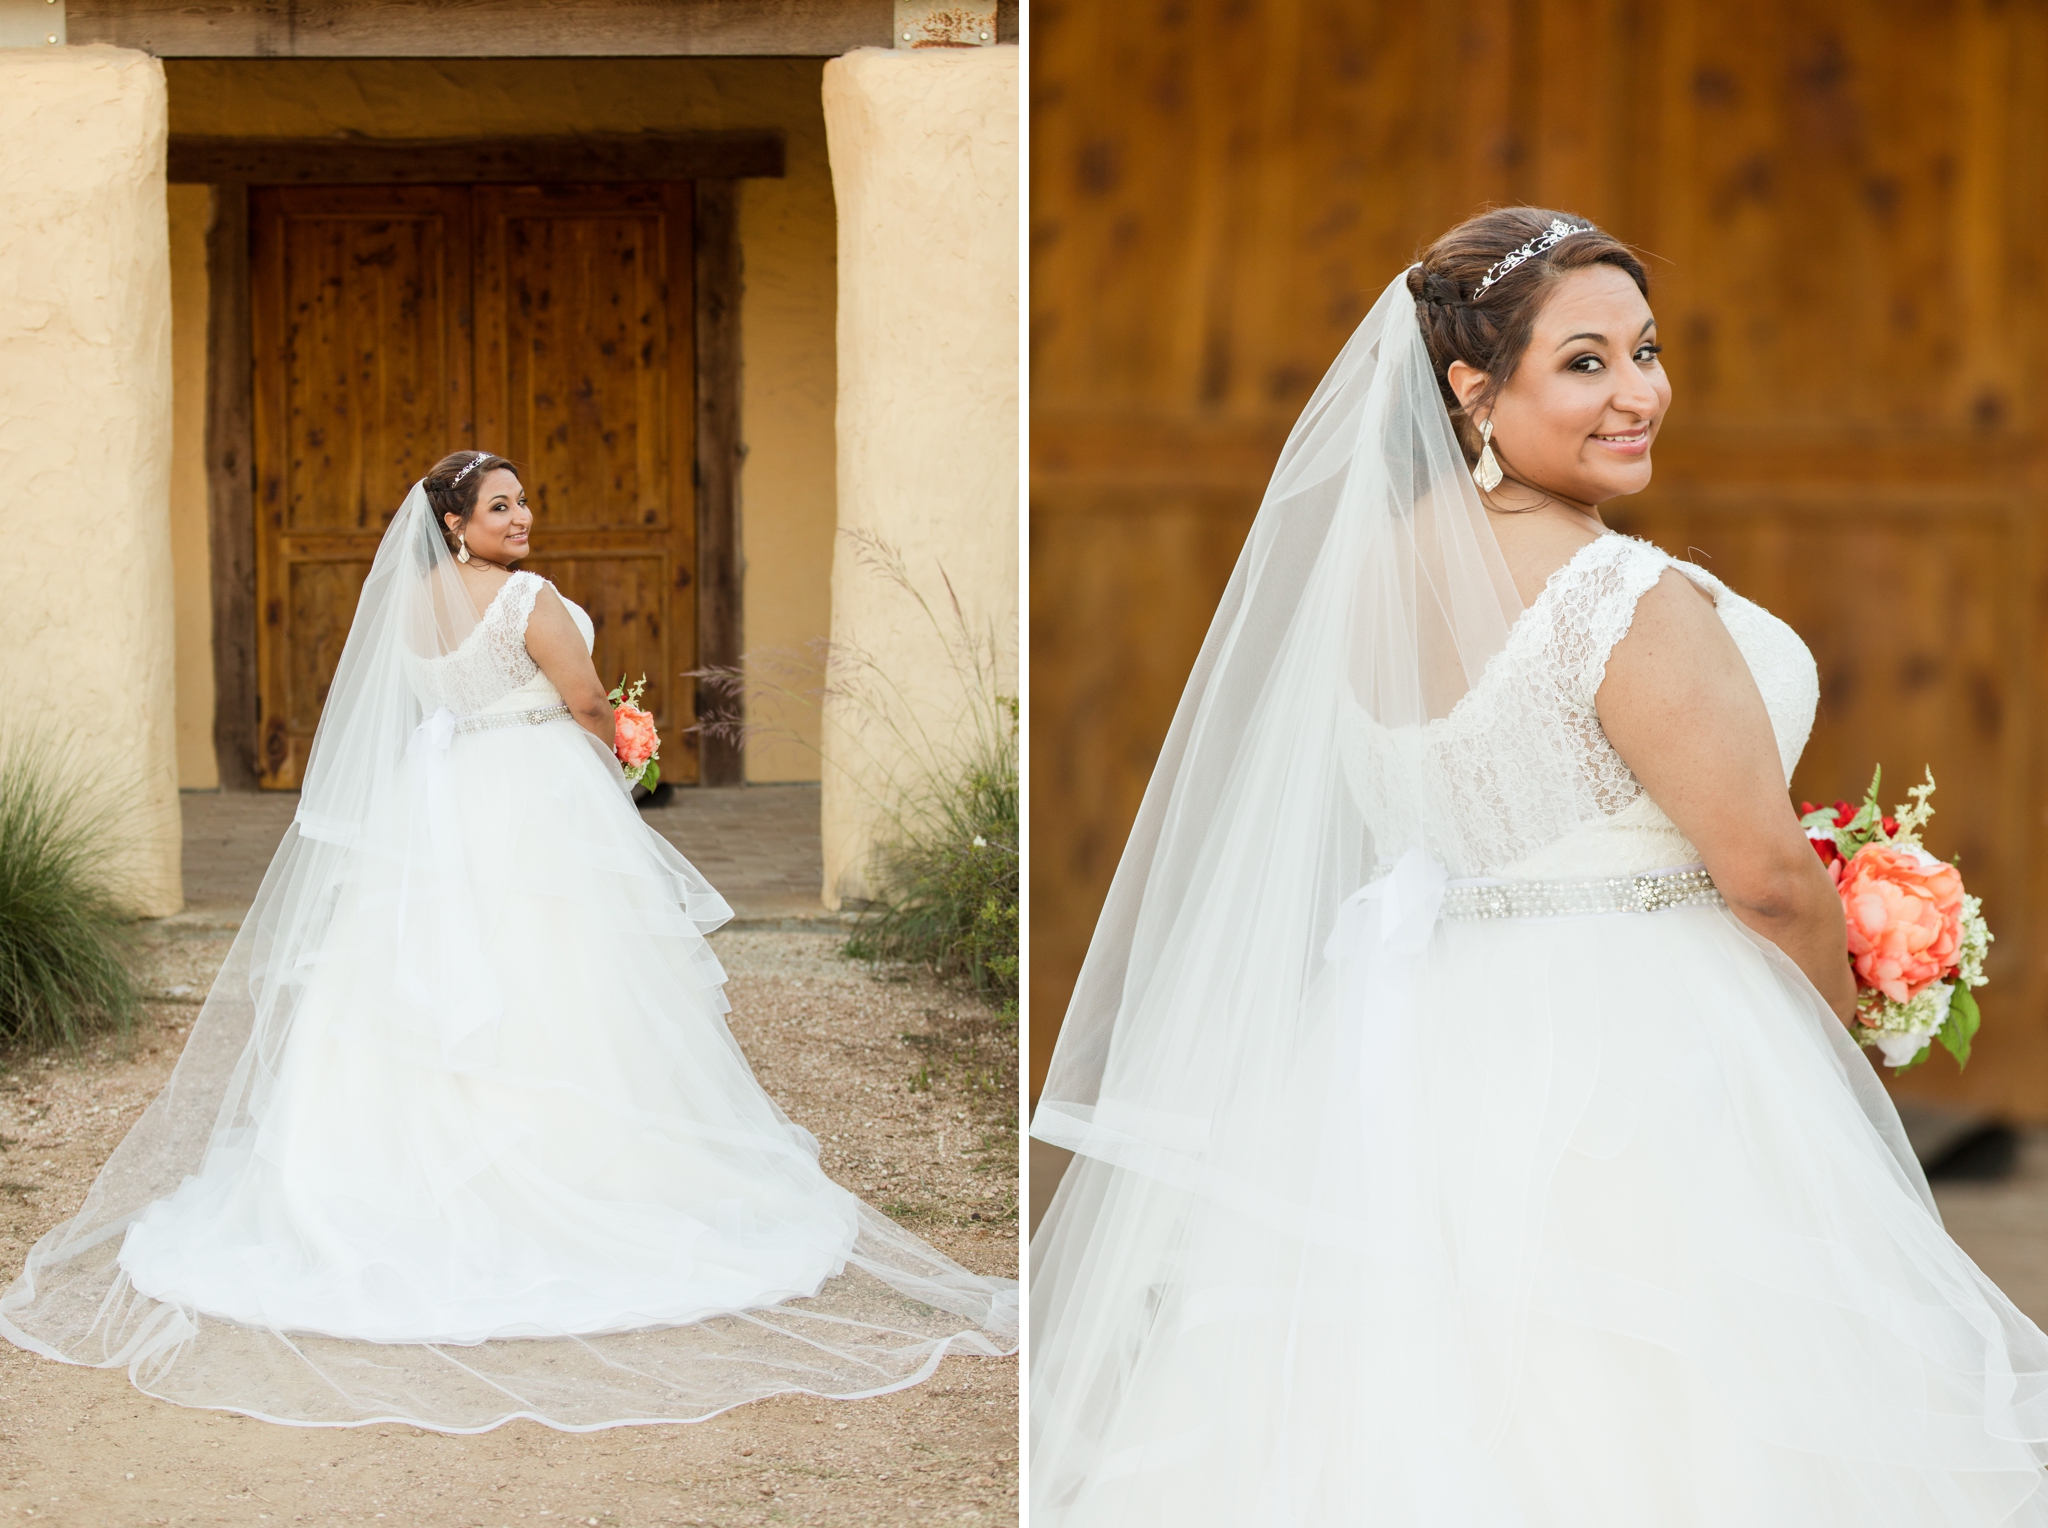 Rustic Bridal Session at Roszell Gardens in San Antonio, TX by Dawn Elizabeth Studios